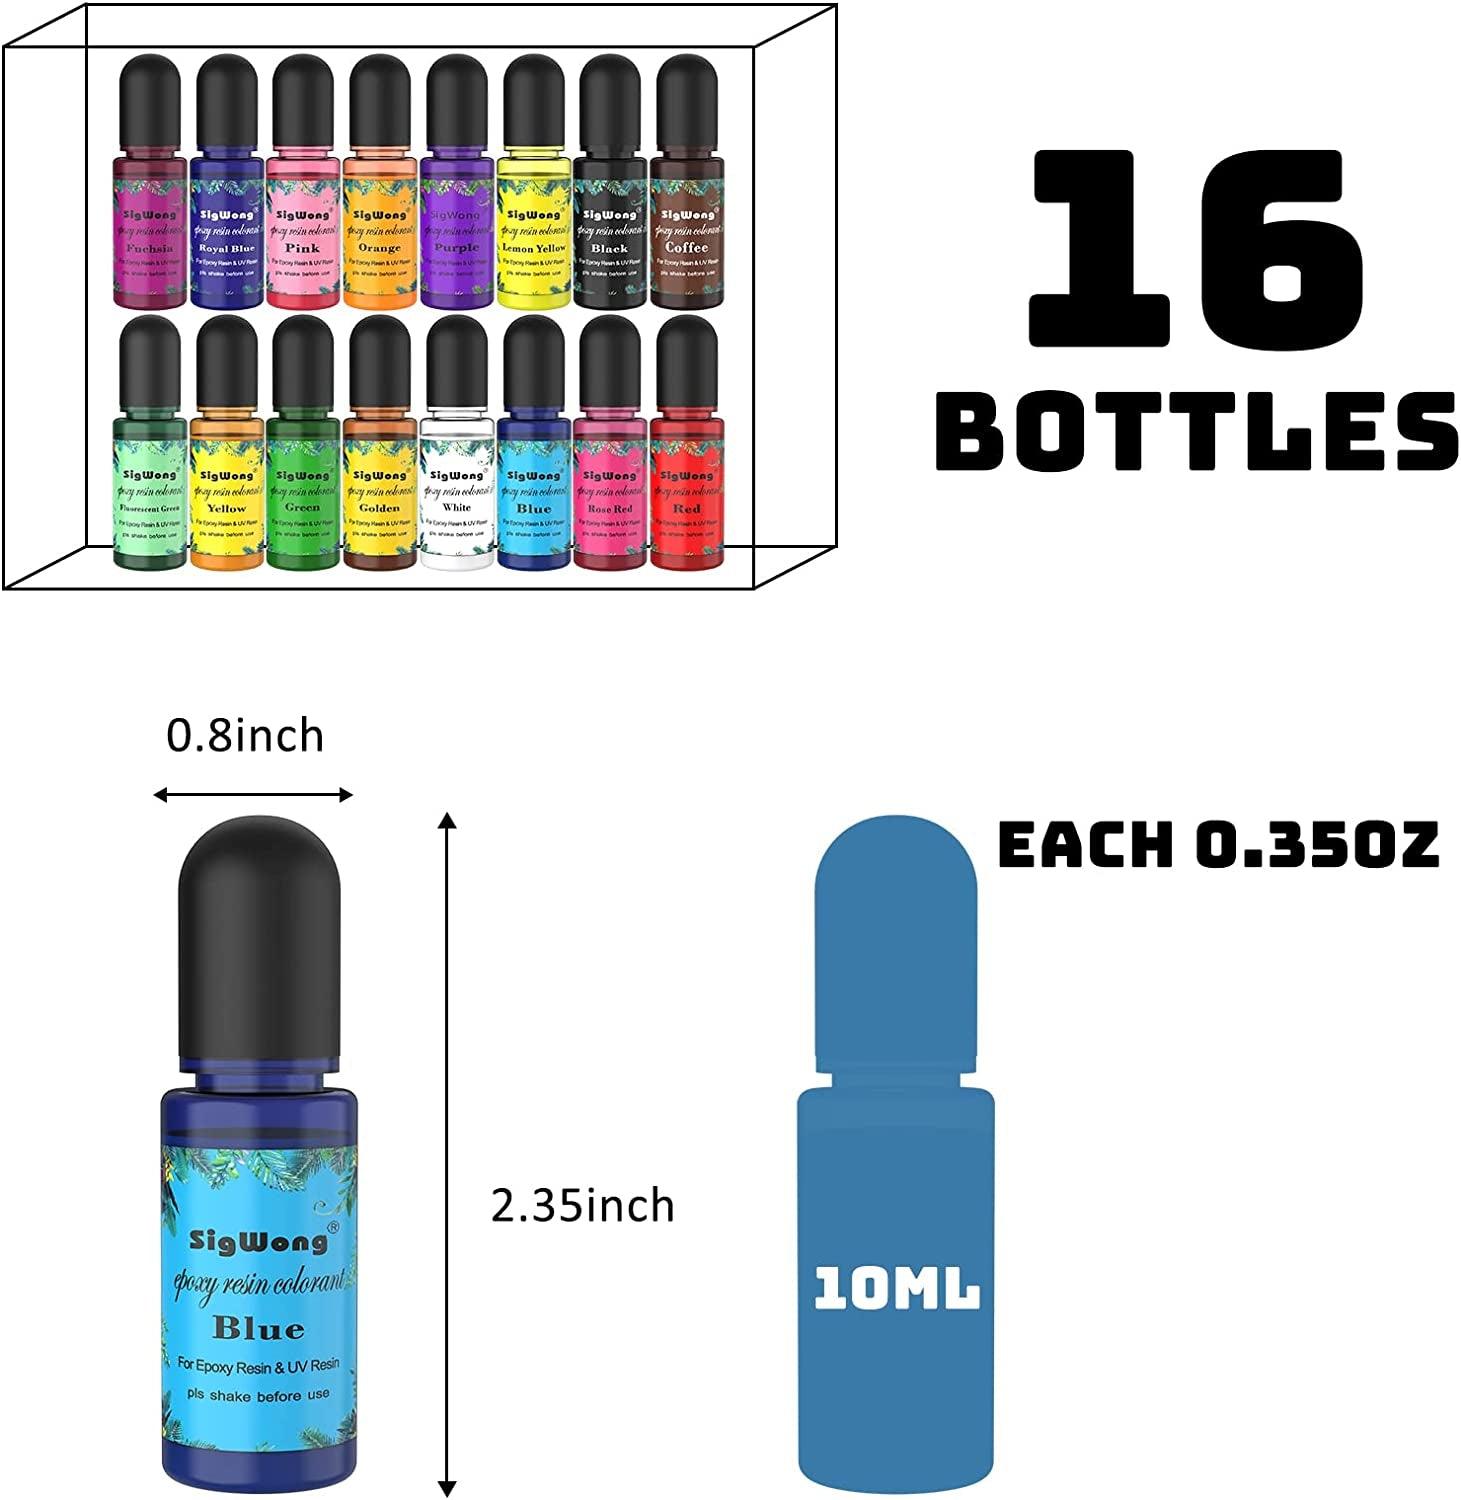  Epoxy Resin Pigment - 30 Colors Transparent UV Resin